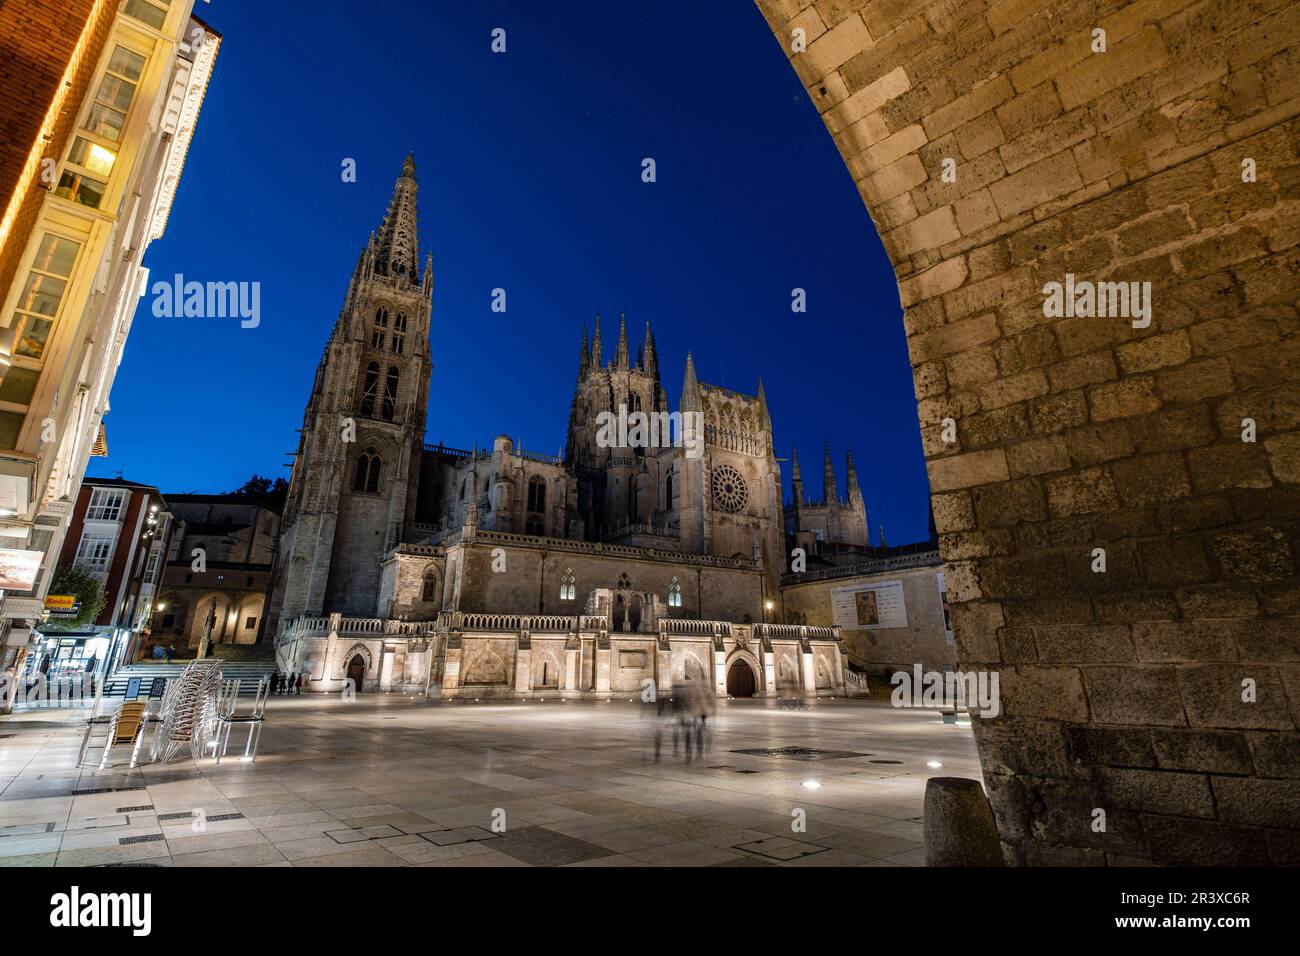 Cattedrale di Burgos, Santa Iglesia Catedral Basílica Metropolitana di Santa María, provincia di Burgos, Spagna. Foto Stock